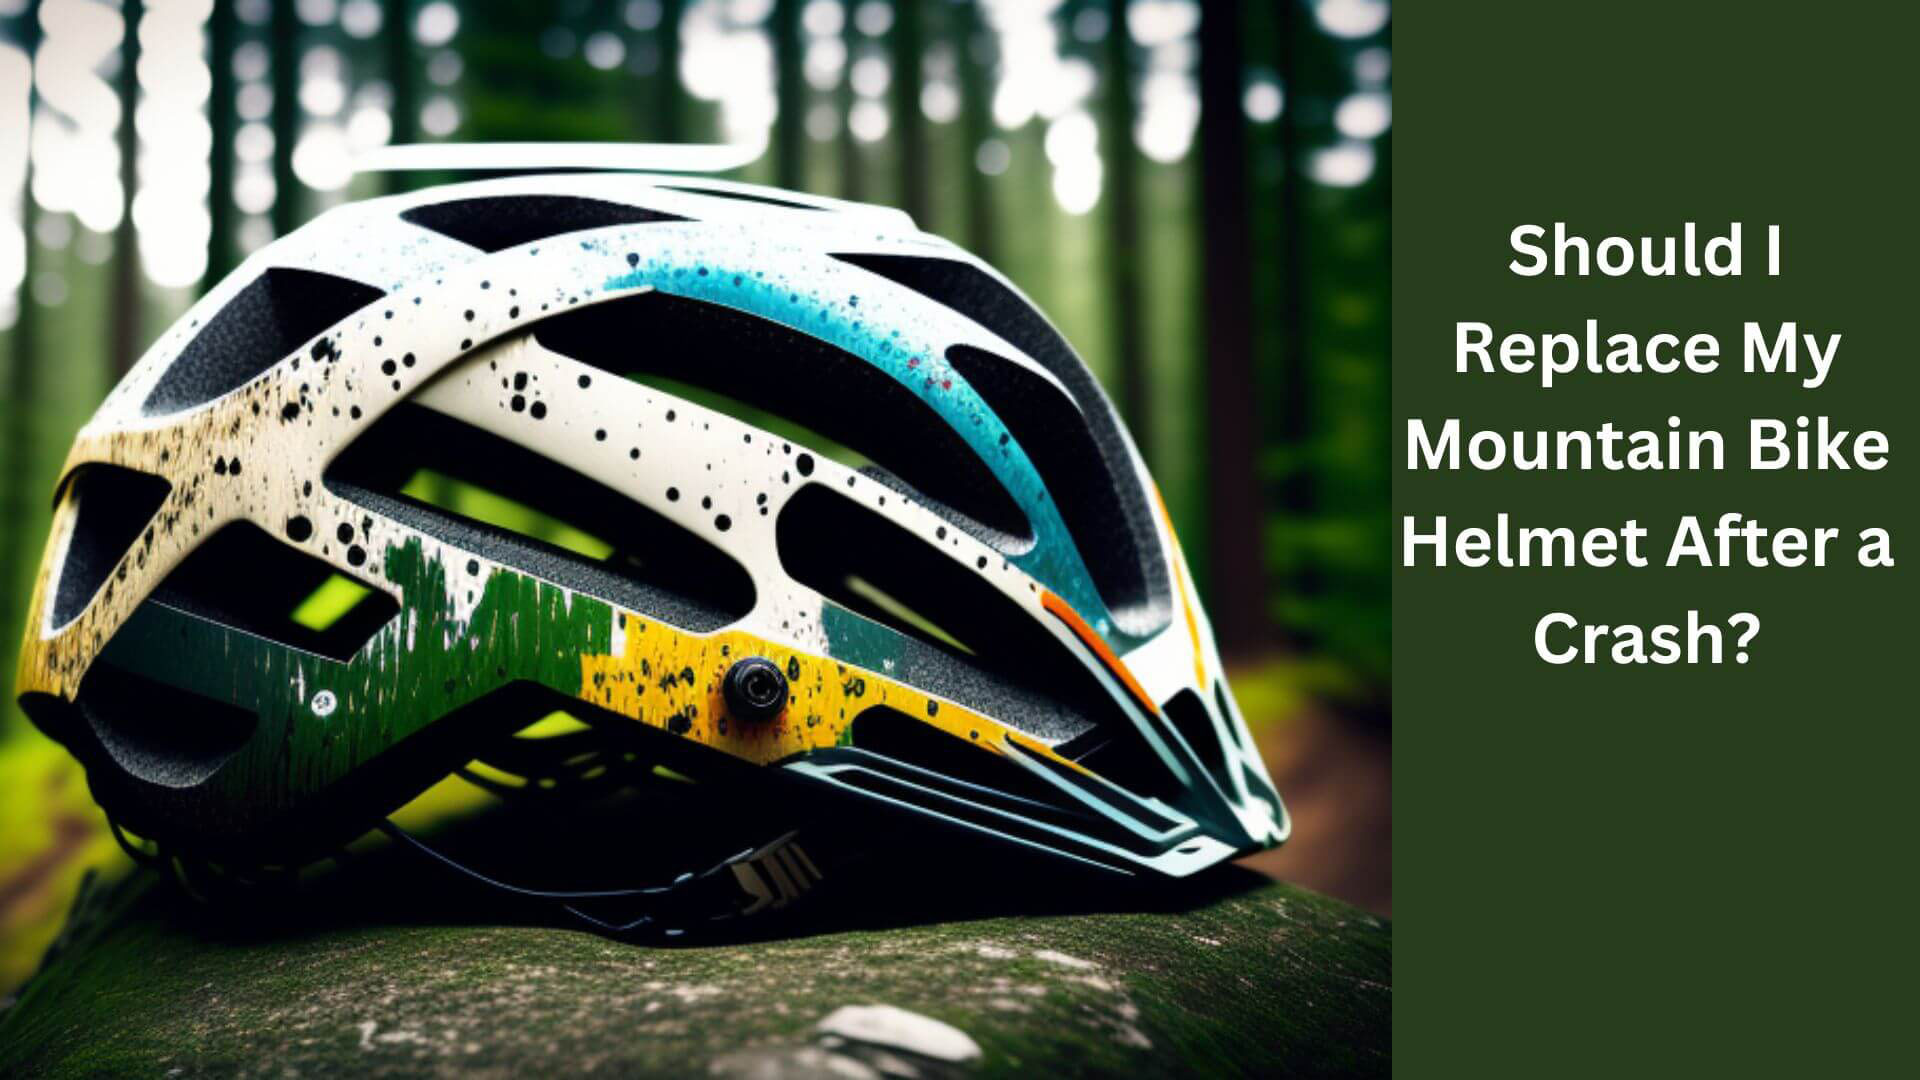 Should I Replace My Mountain Bike Helmet After a Crash?